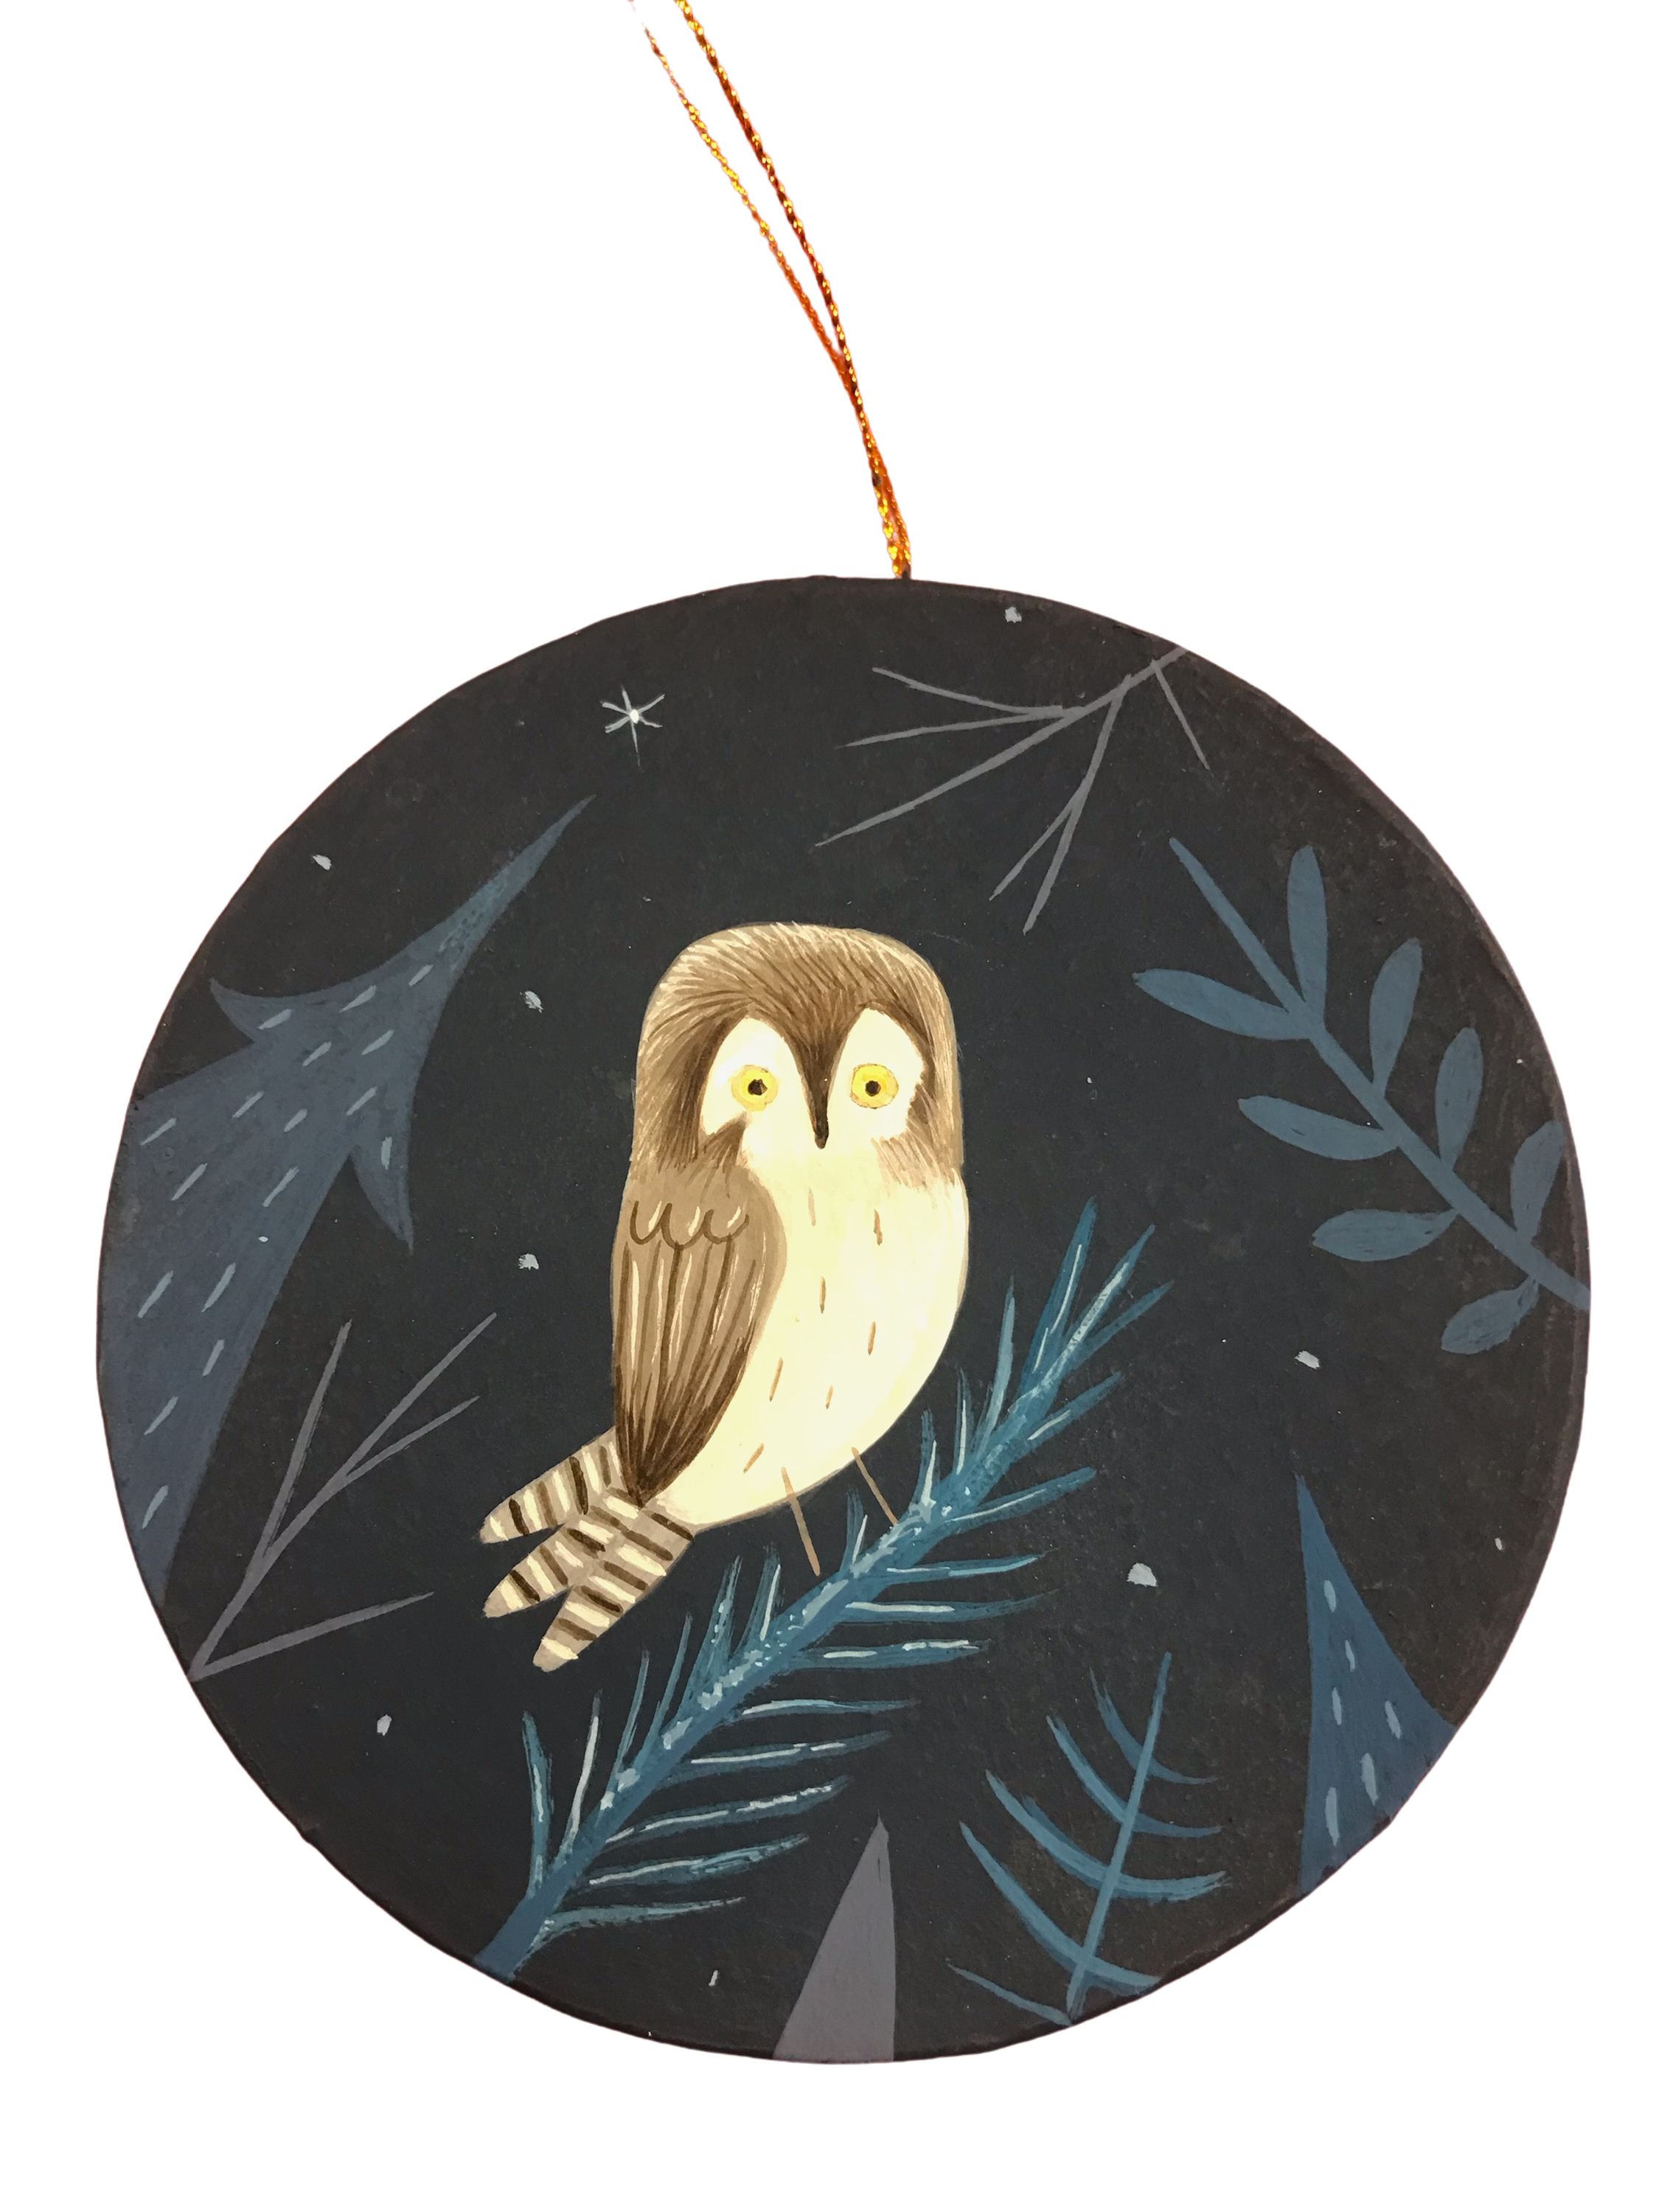 Chris Lyles hand painted owl ornament